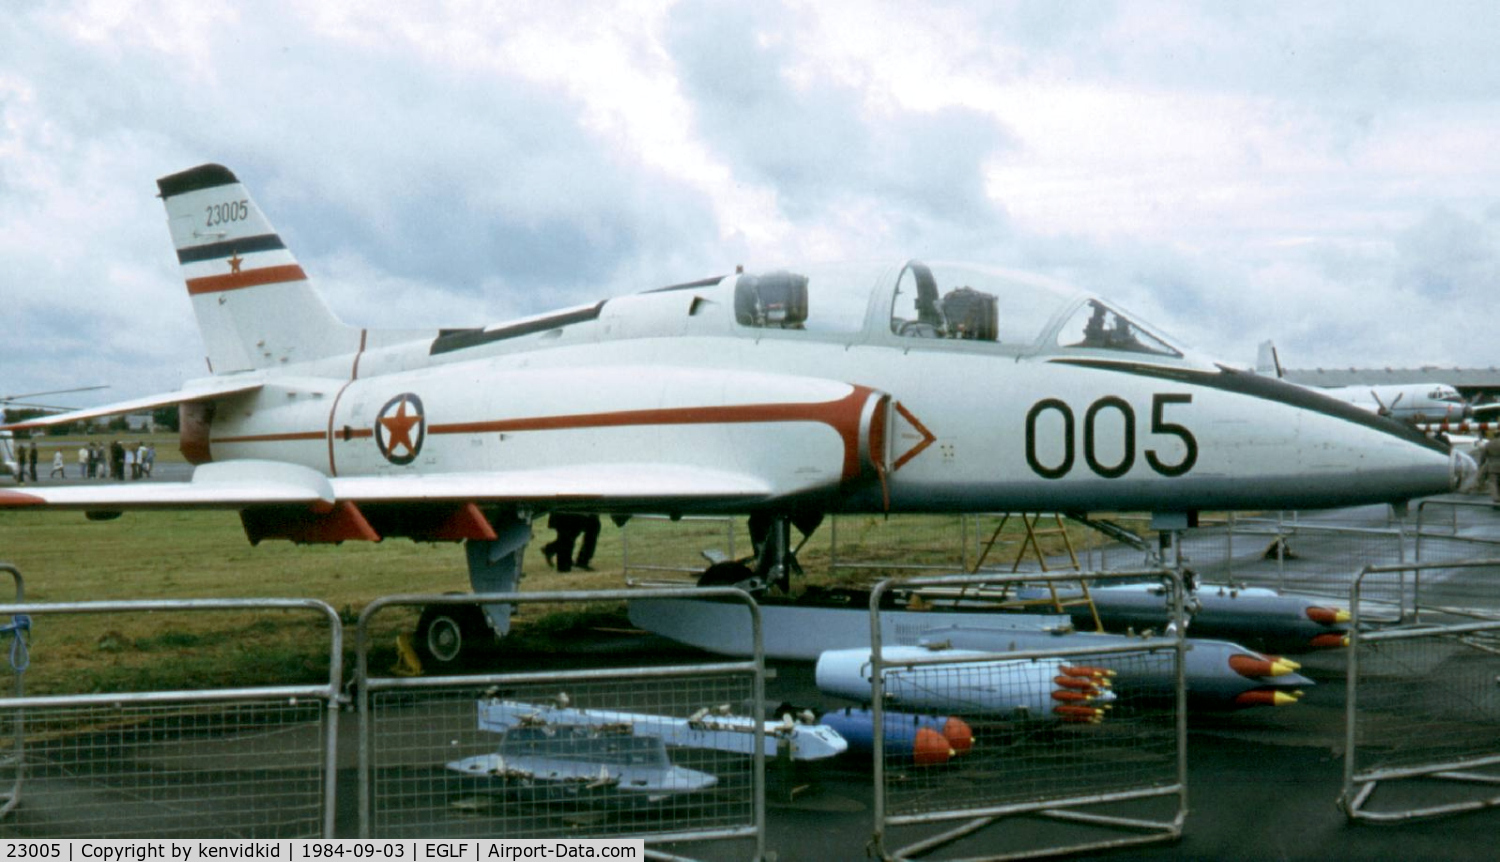 23005, Soko G-4 Super Galeb C/N 005, At the 1984 Farnborough International Air Show. Scanned from slide.